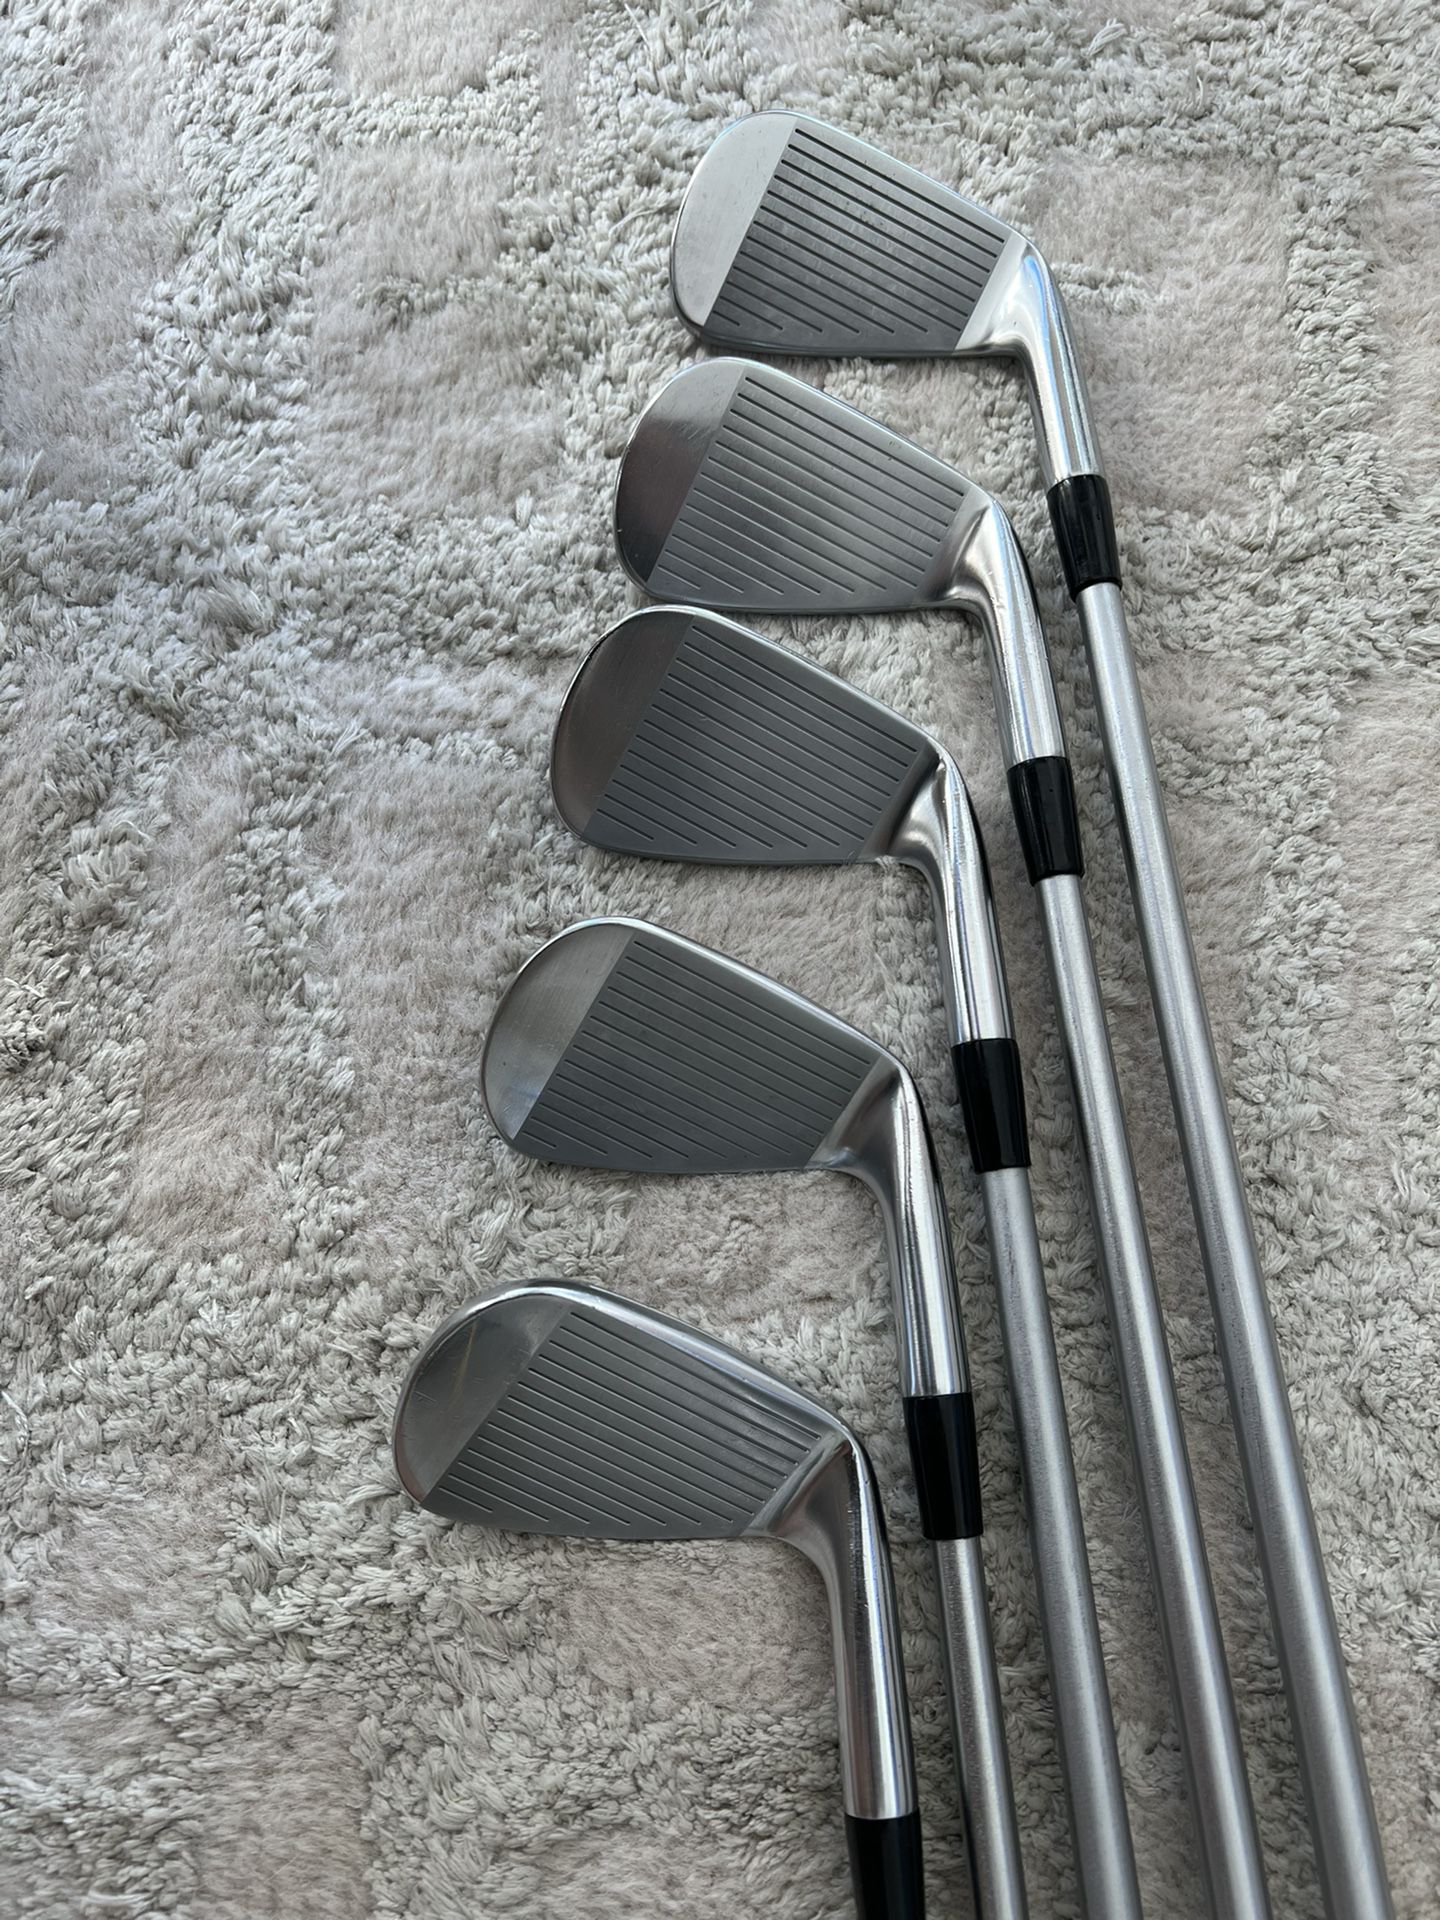 Lefty Golf Set (6-P, 4H, Driver, Putter)